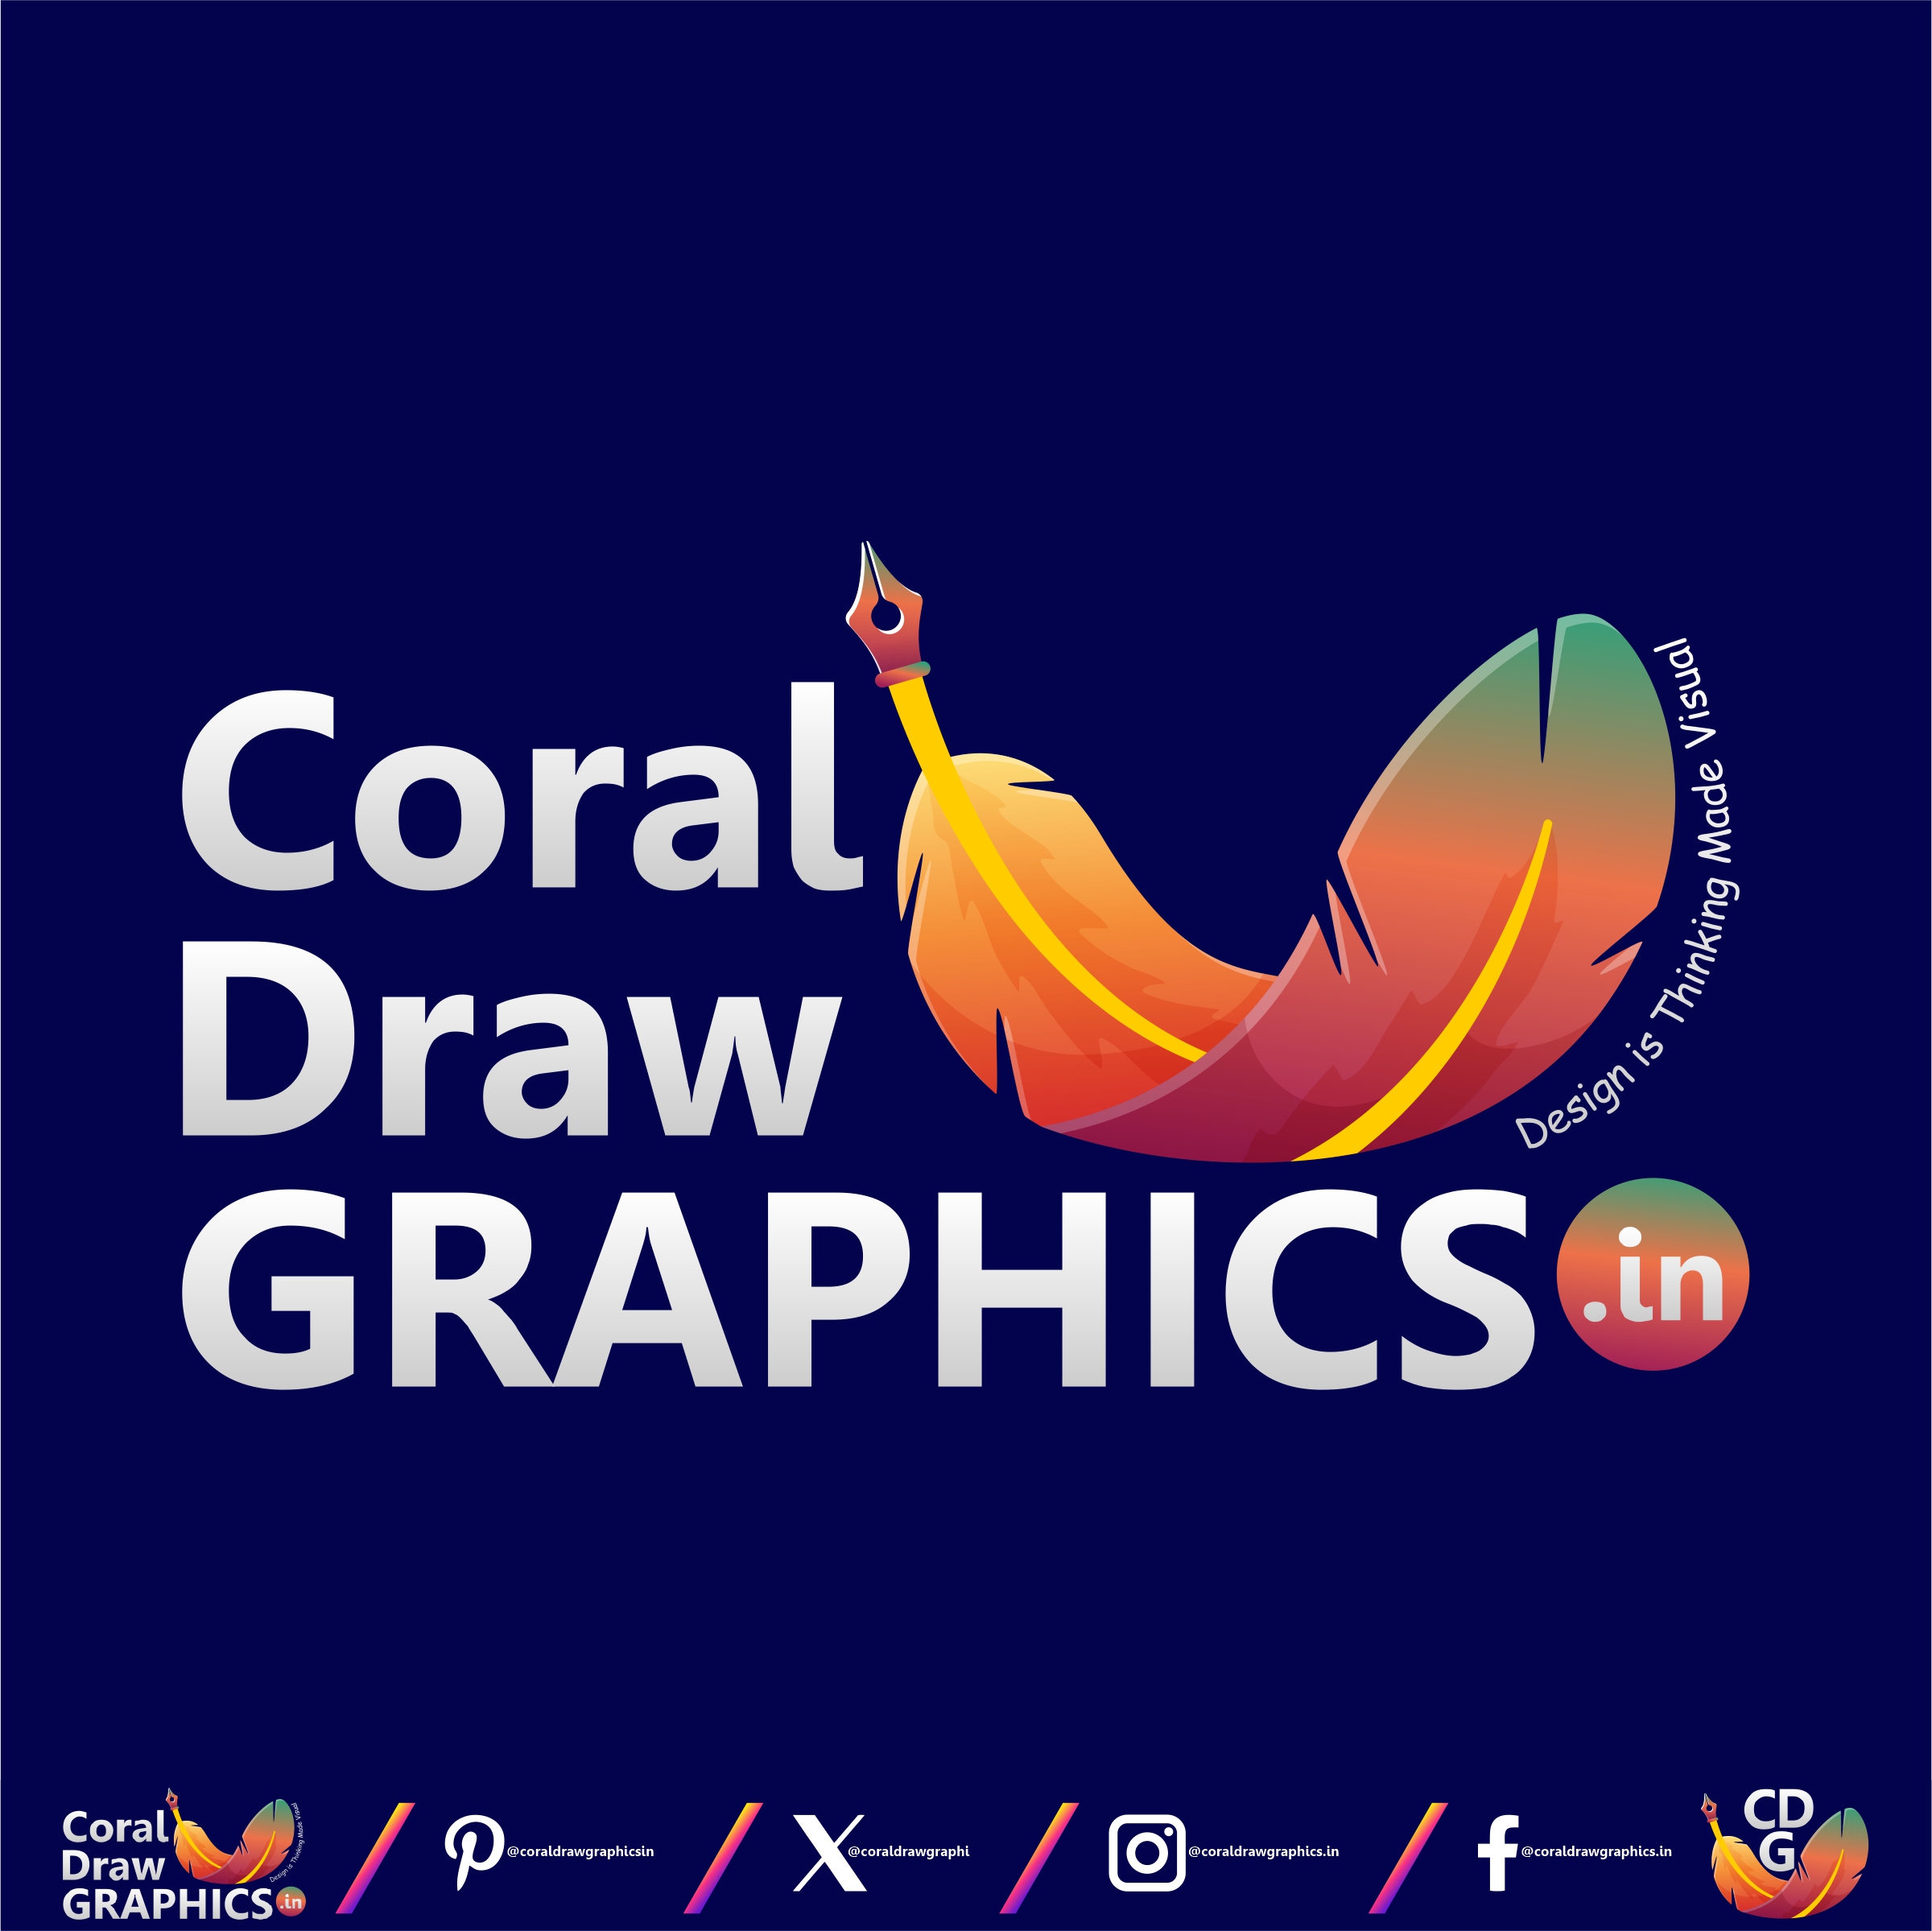 CoralDrawGraphics Website Logo | CDR | AI | PDF | JPG